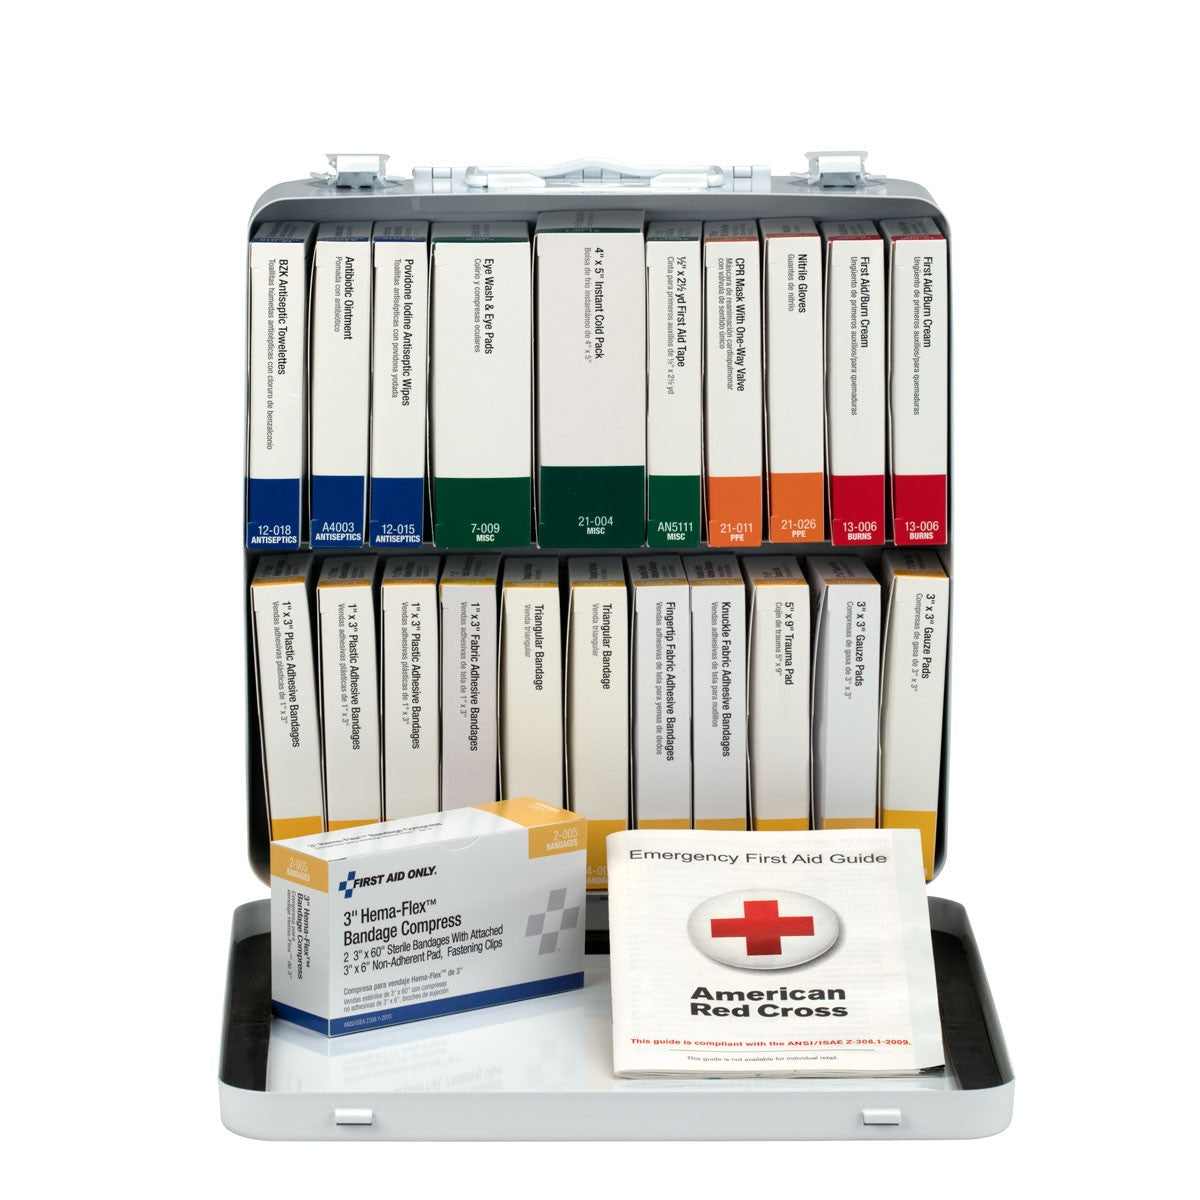 24 Unit First Aid Kit, Metal Case - W-242-AN